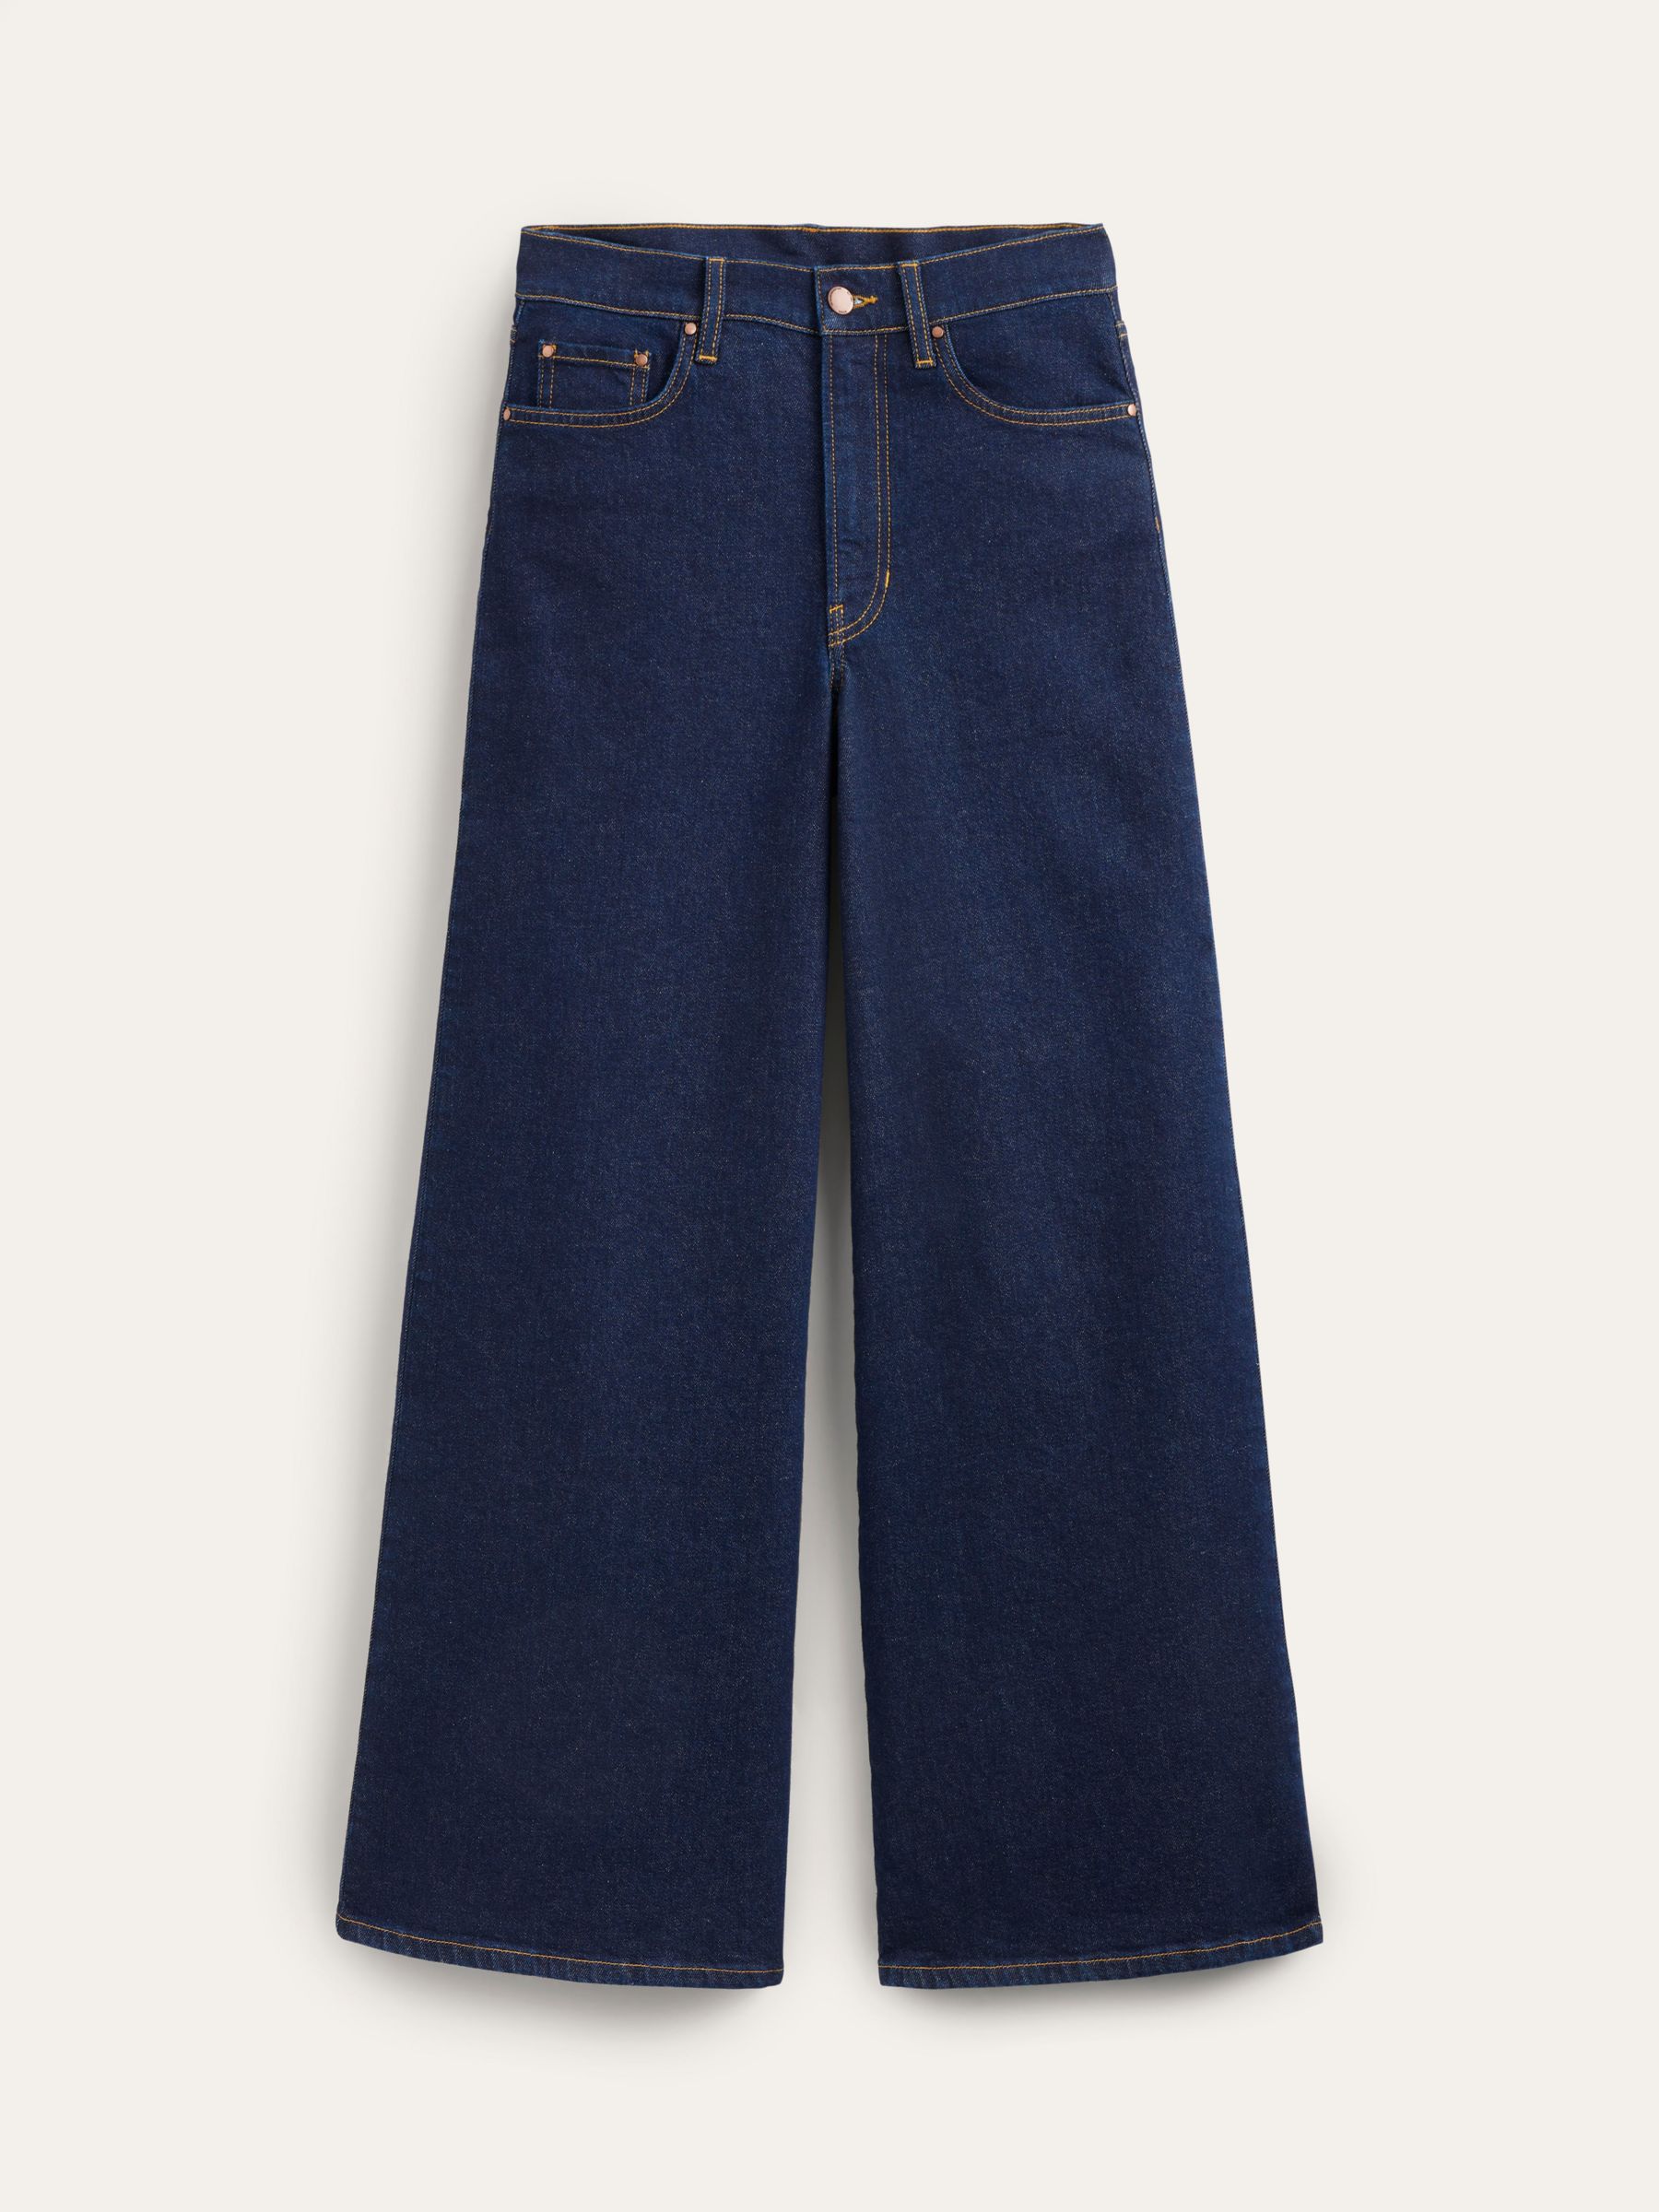 Boden High Rise Wide Leg Jeans, Indigo, W32/L32